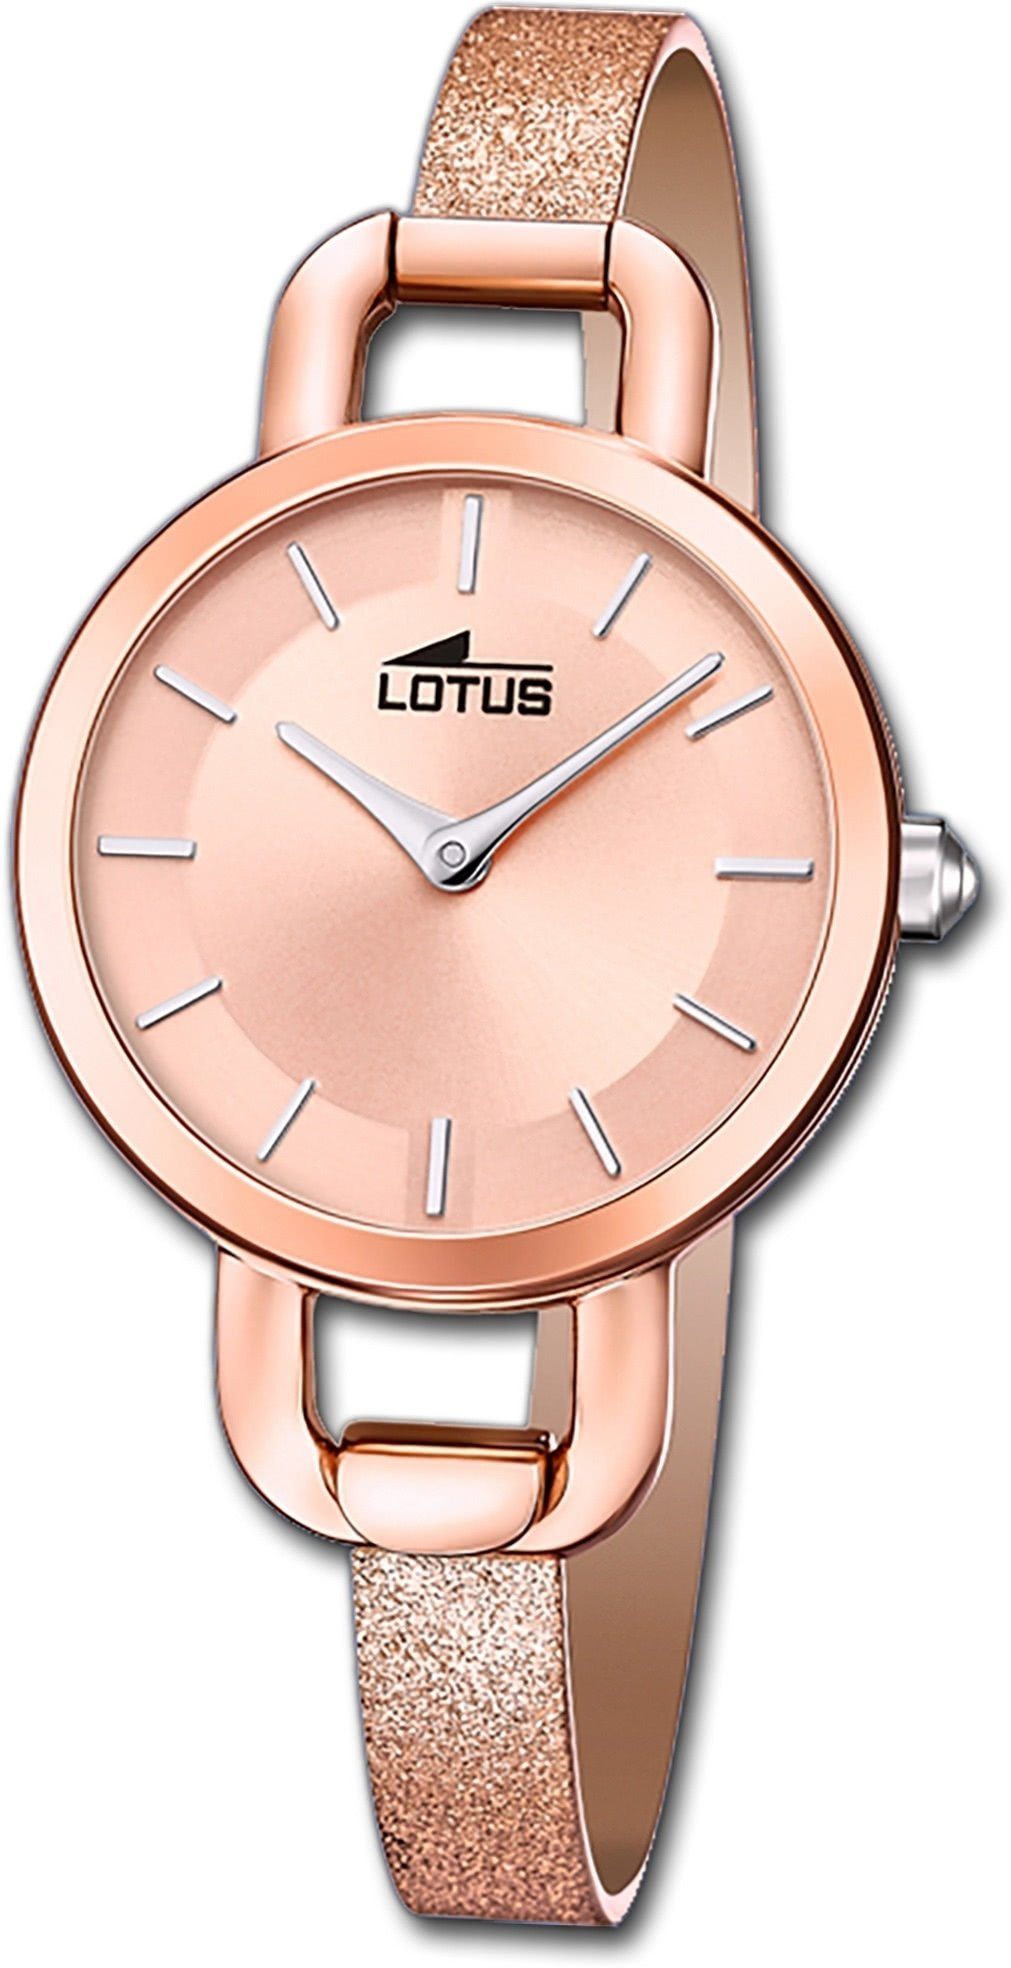 Lotus Quarzuhr Lotus Leder Damen Uhr 18747 Armbanduhr, Damenuhr mit Lederarmband, rundes Gehäuse, klein (ca. 28mm), Elegant-S